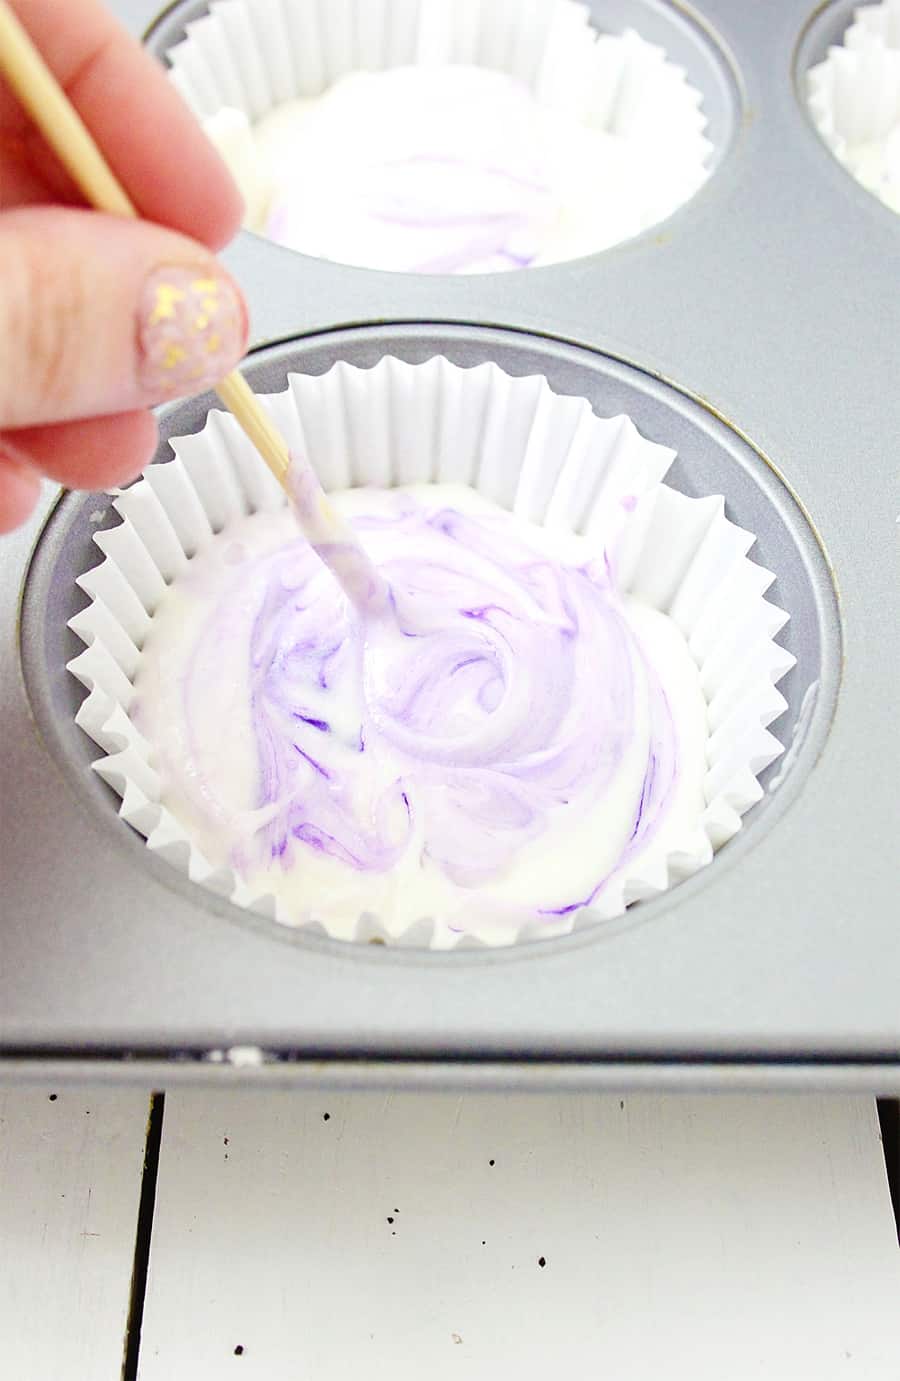 ghost cupcake batter swirled